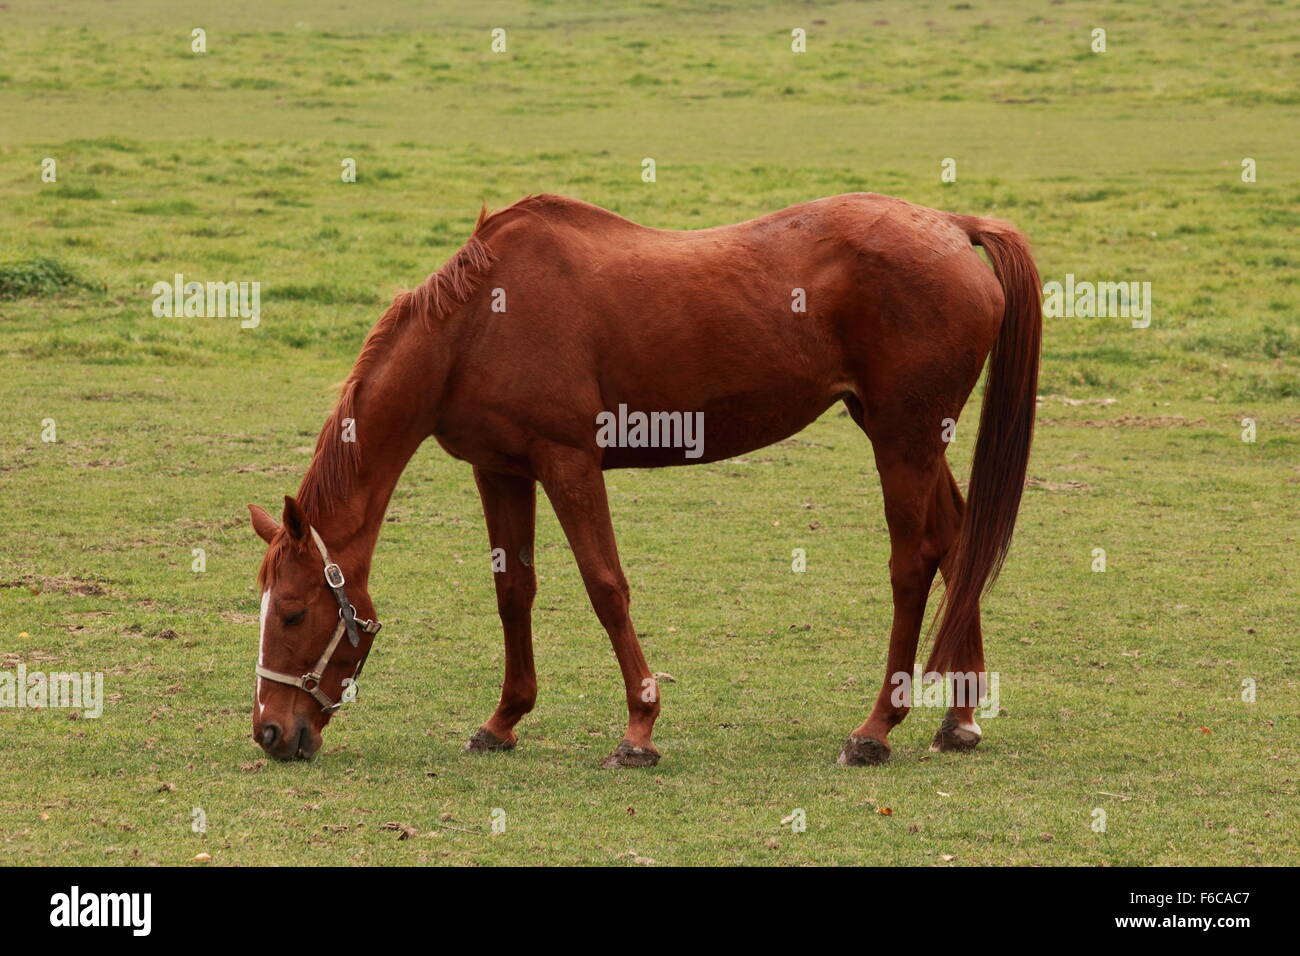 Horse in an autumn field Stock Photo